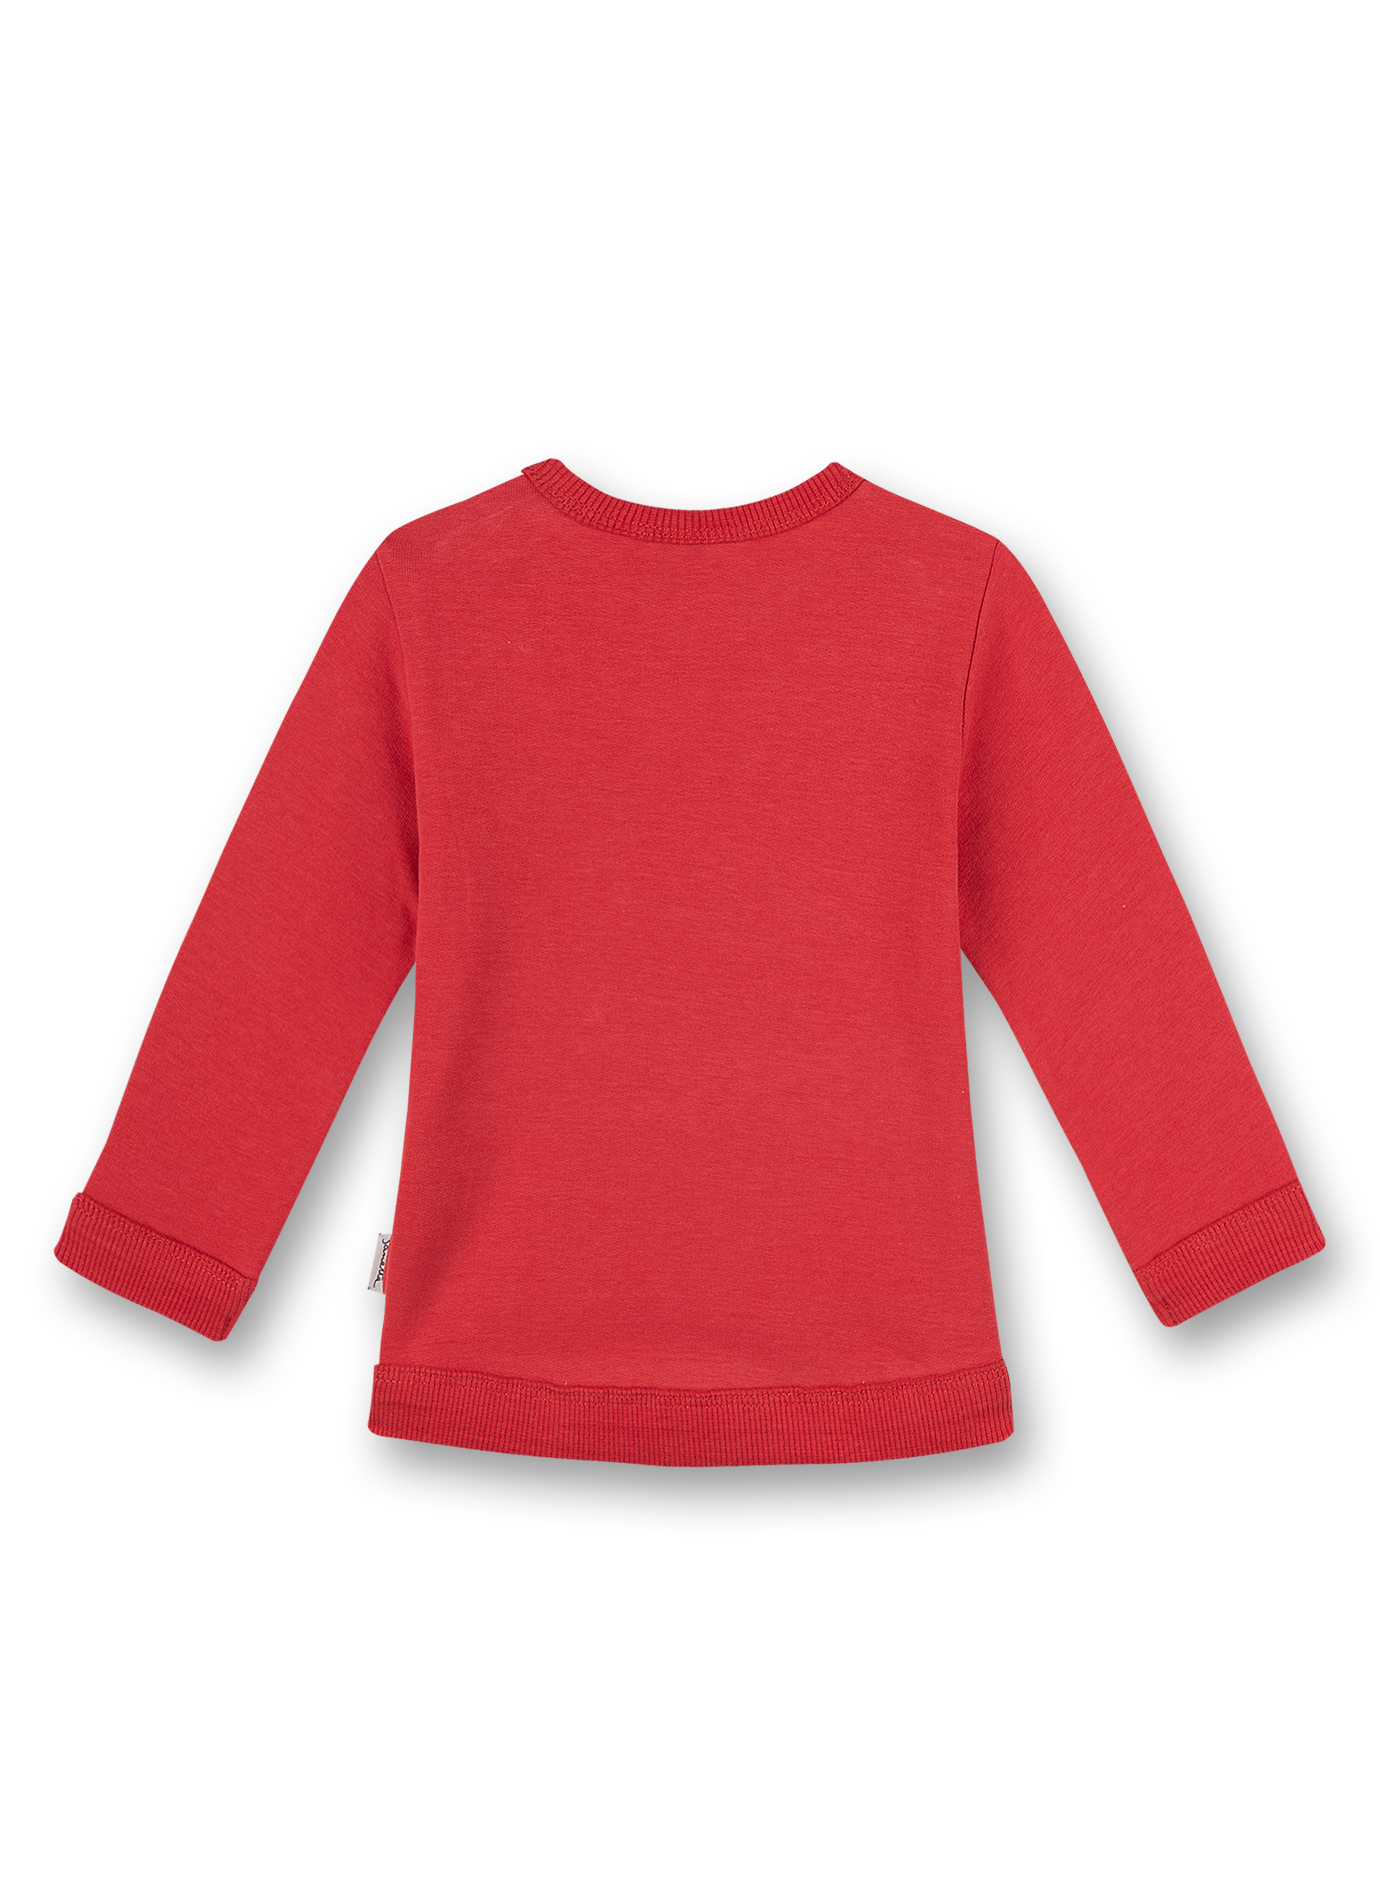 Mädchen-Sweatshirt Rot Little Bear